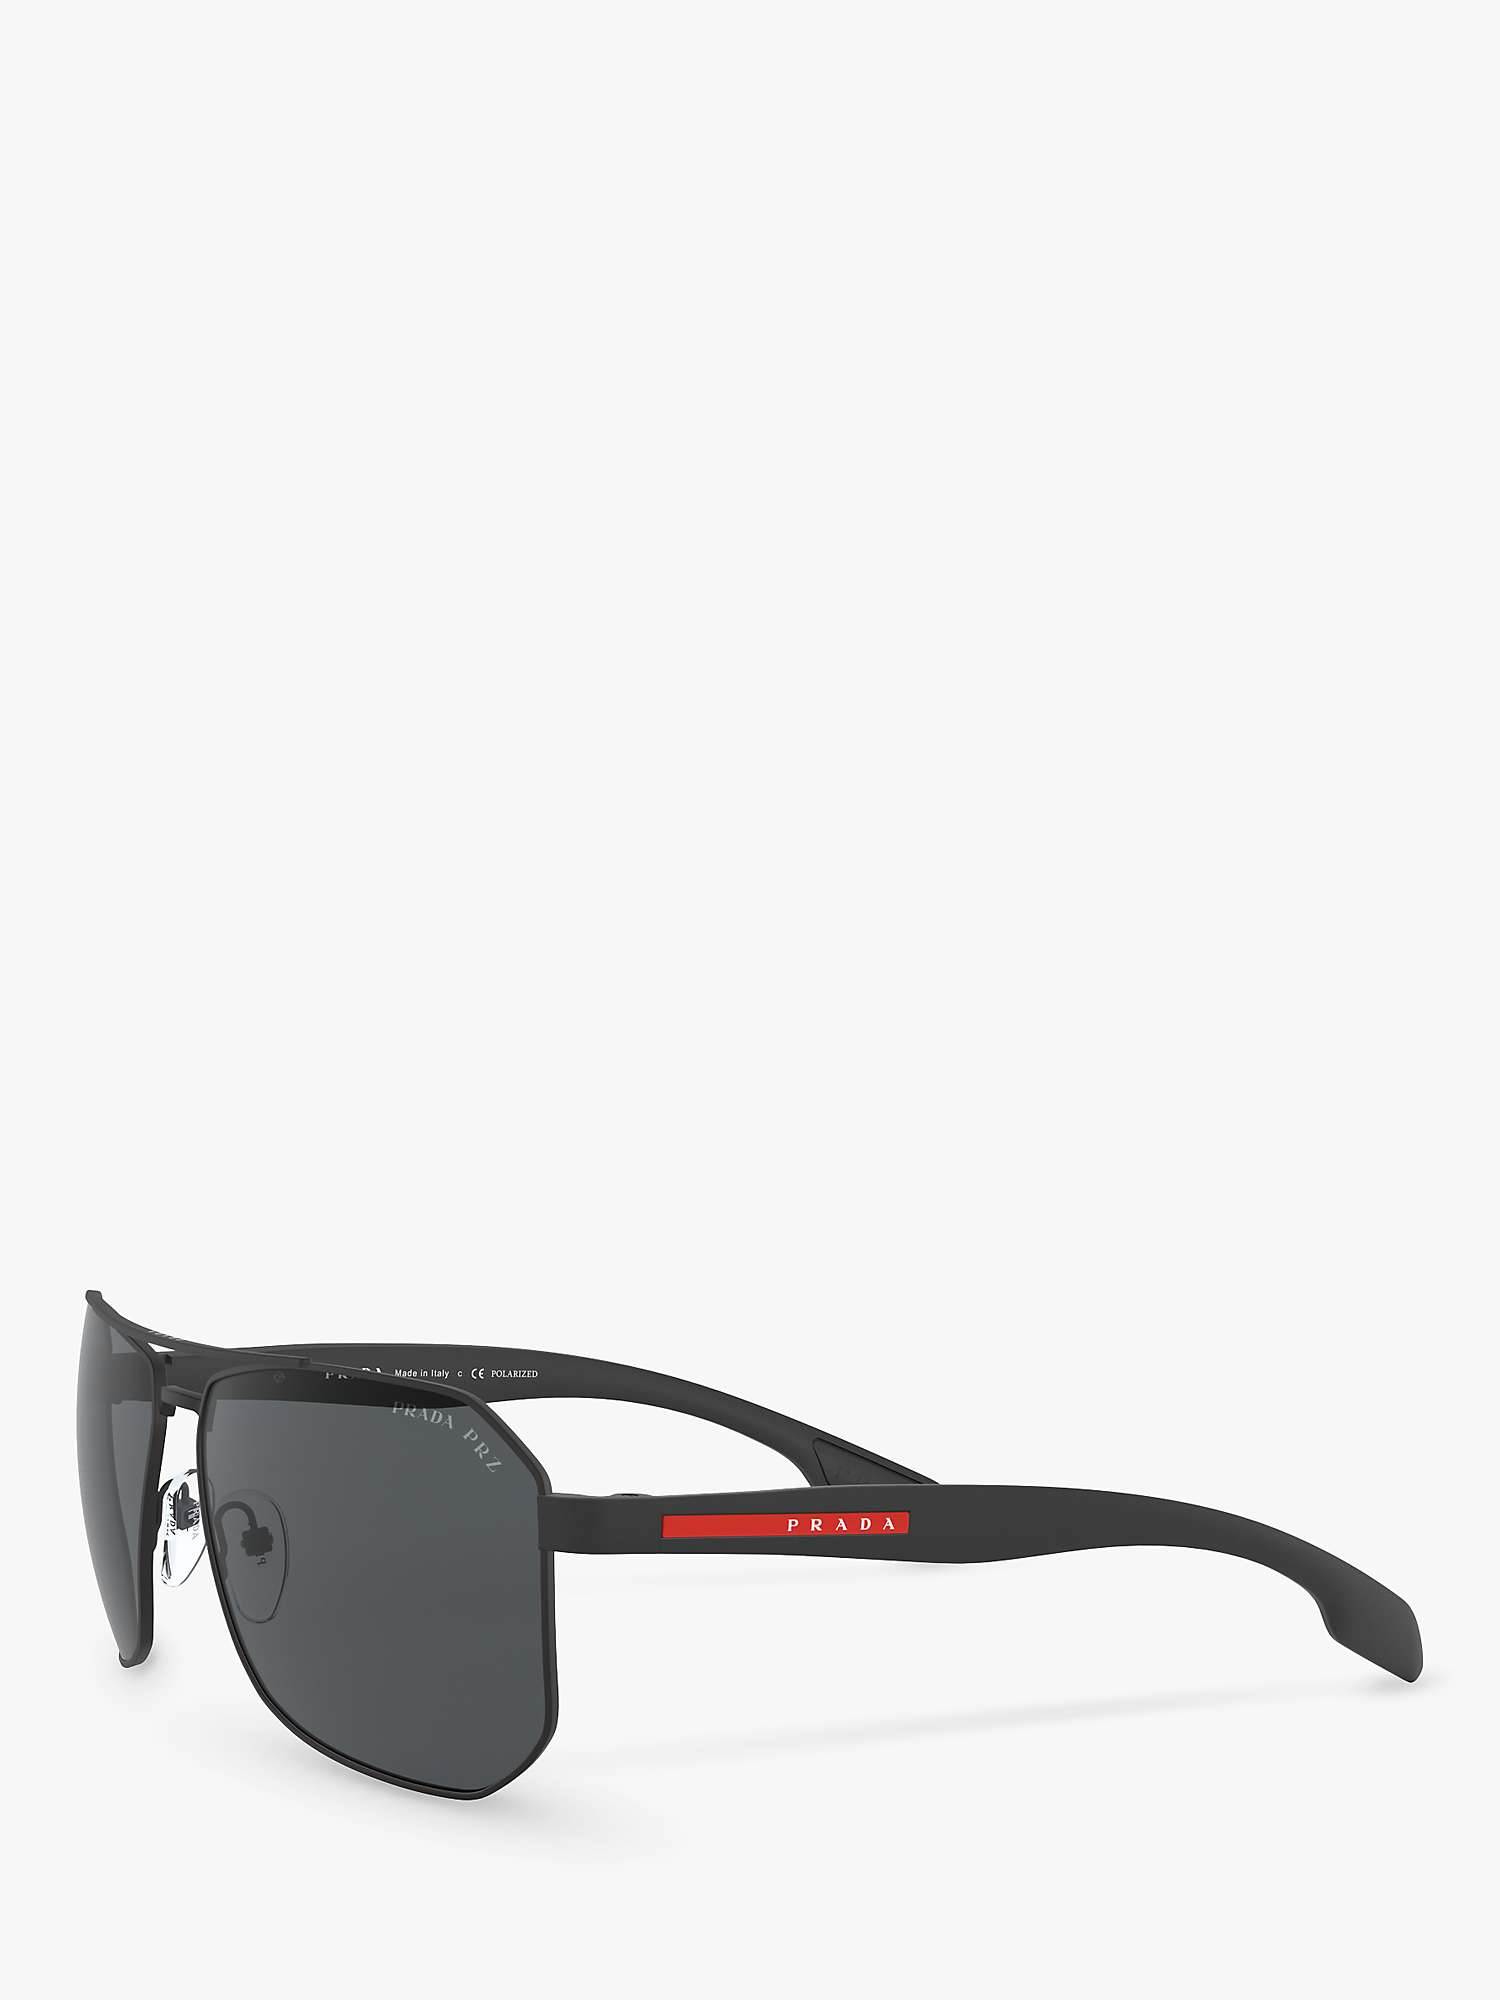 Buy Prada Linea Rossa PS 51VS Men's Polarised Rectangular Sunglasses, Black/Grey Online at johnlewis.com